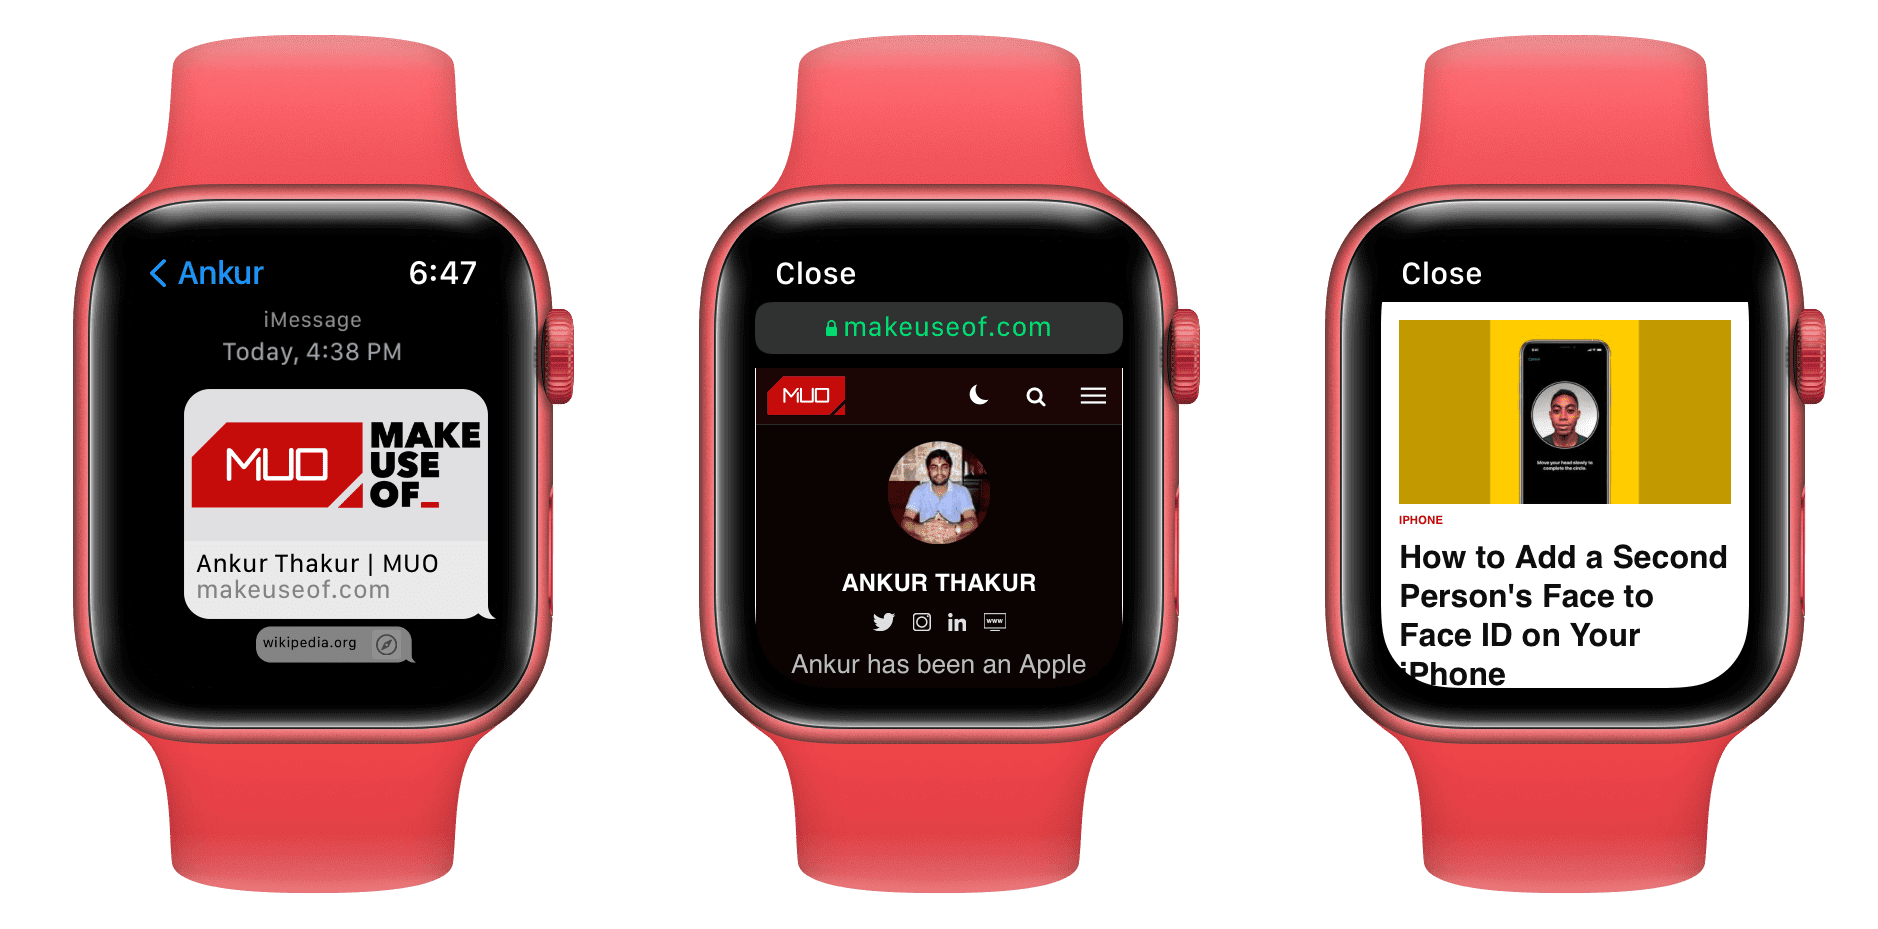 Opening website in Safari on Apple Watch via Messages app